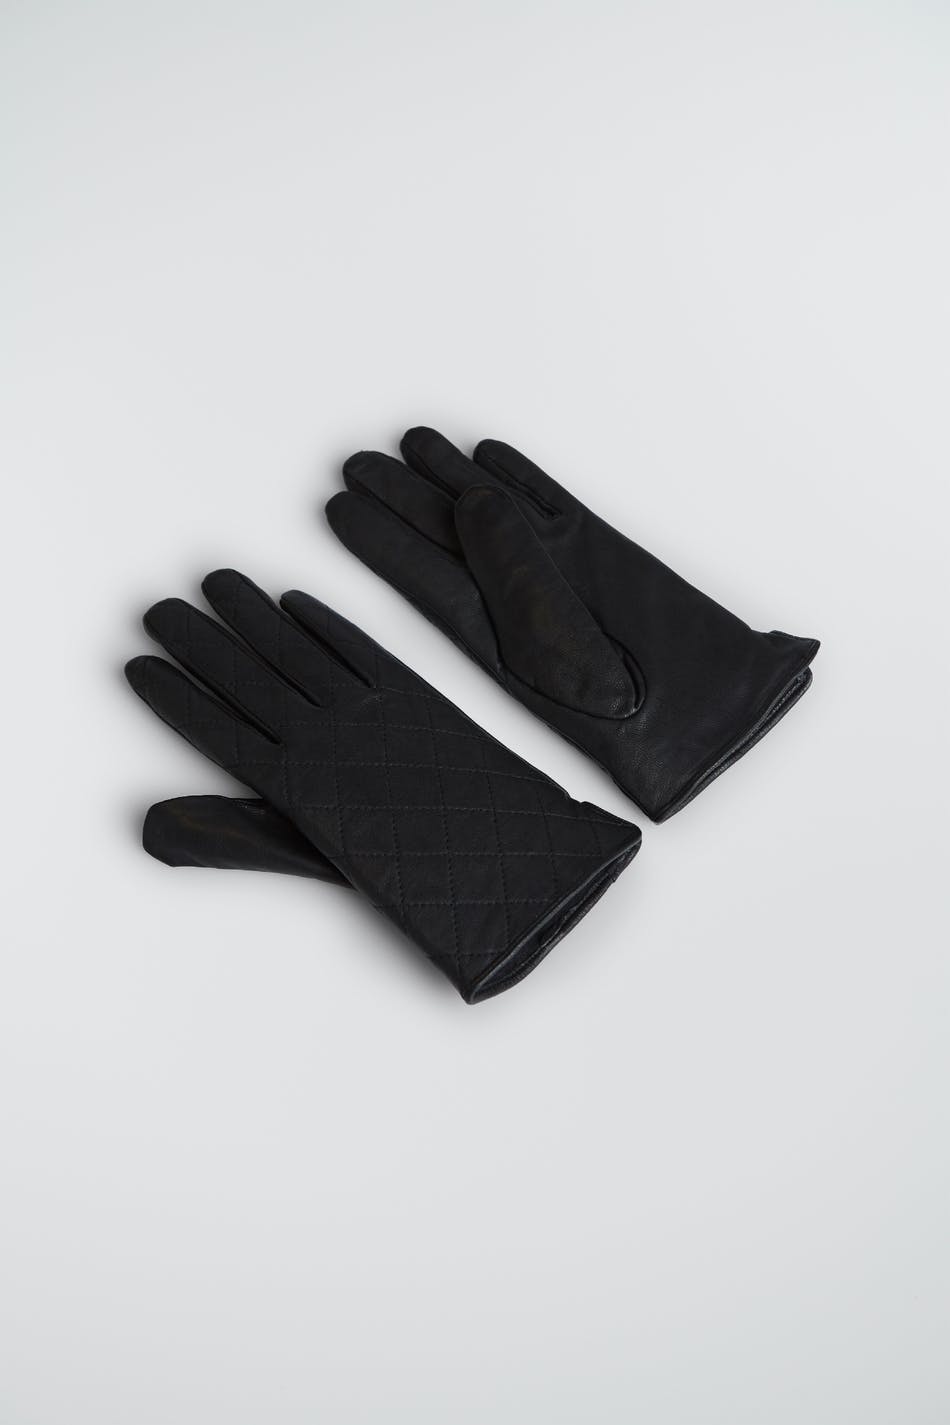 Vega leather glove